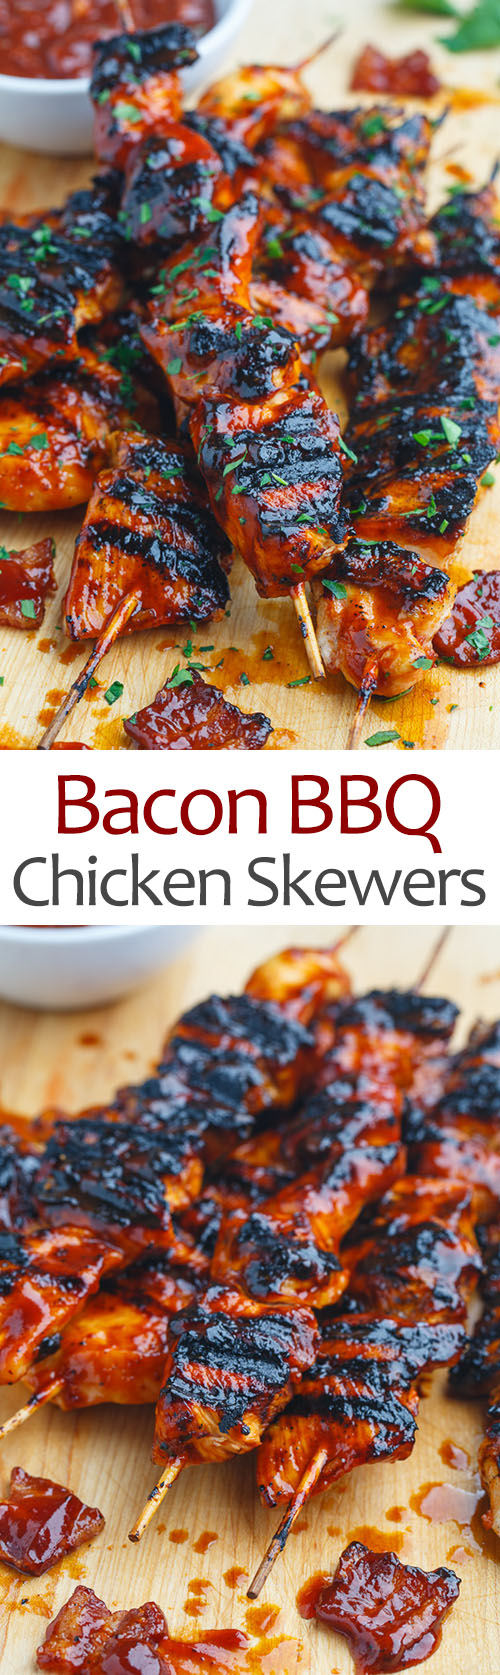 Bacon BBQ Chicken Skewers